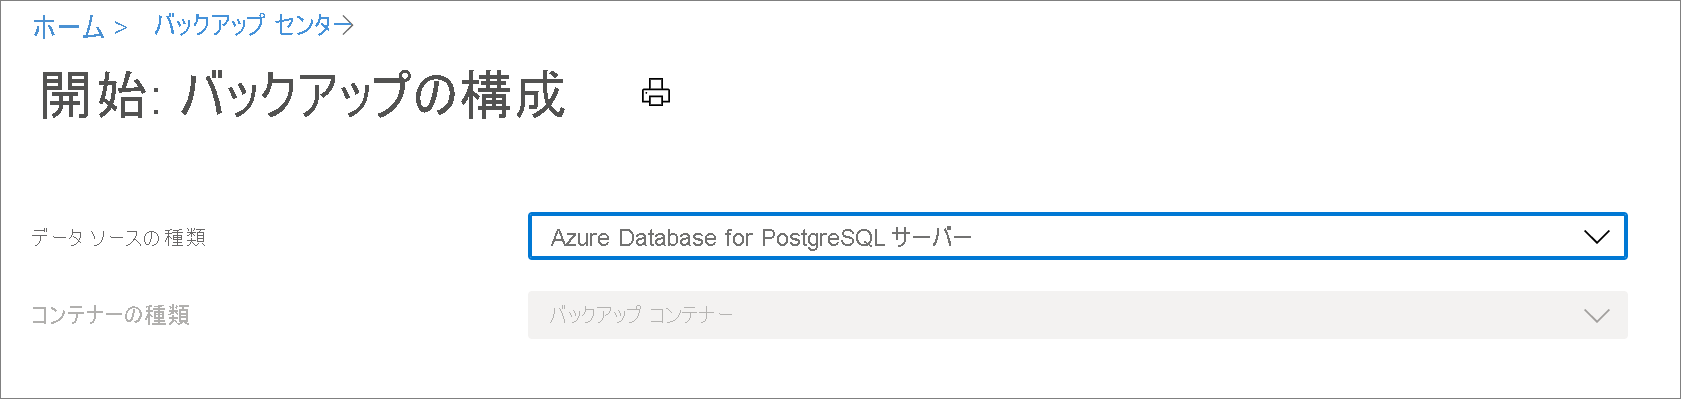 Azure Database for PostgreSQL サーバーのバックアップを構成するためのデータソースを選択する